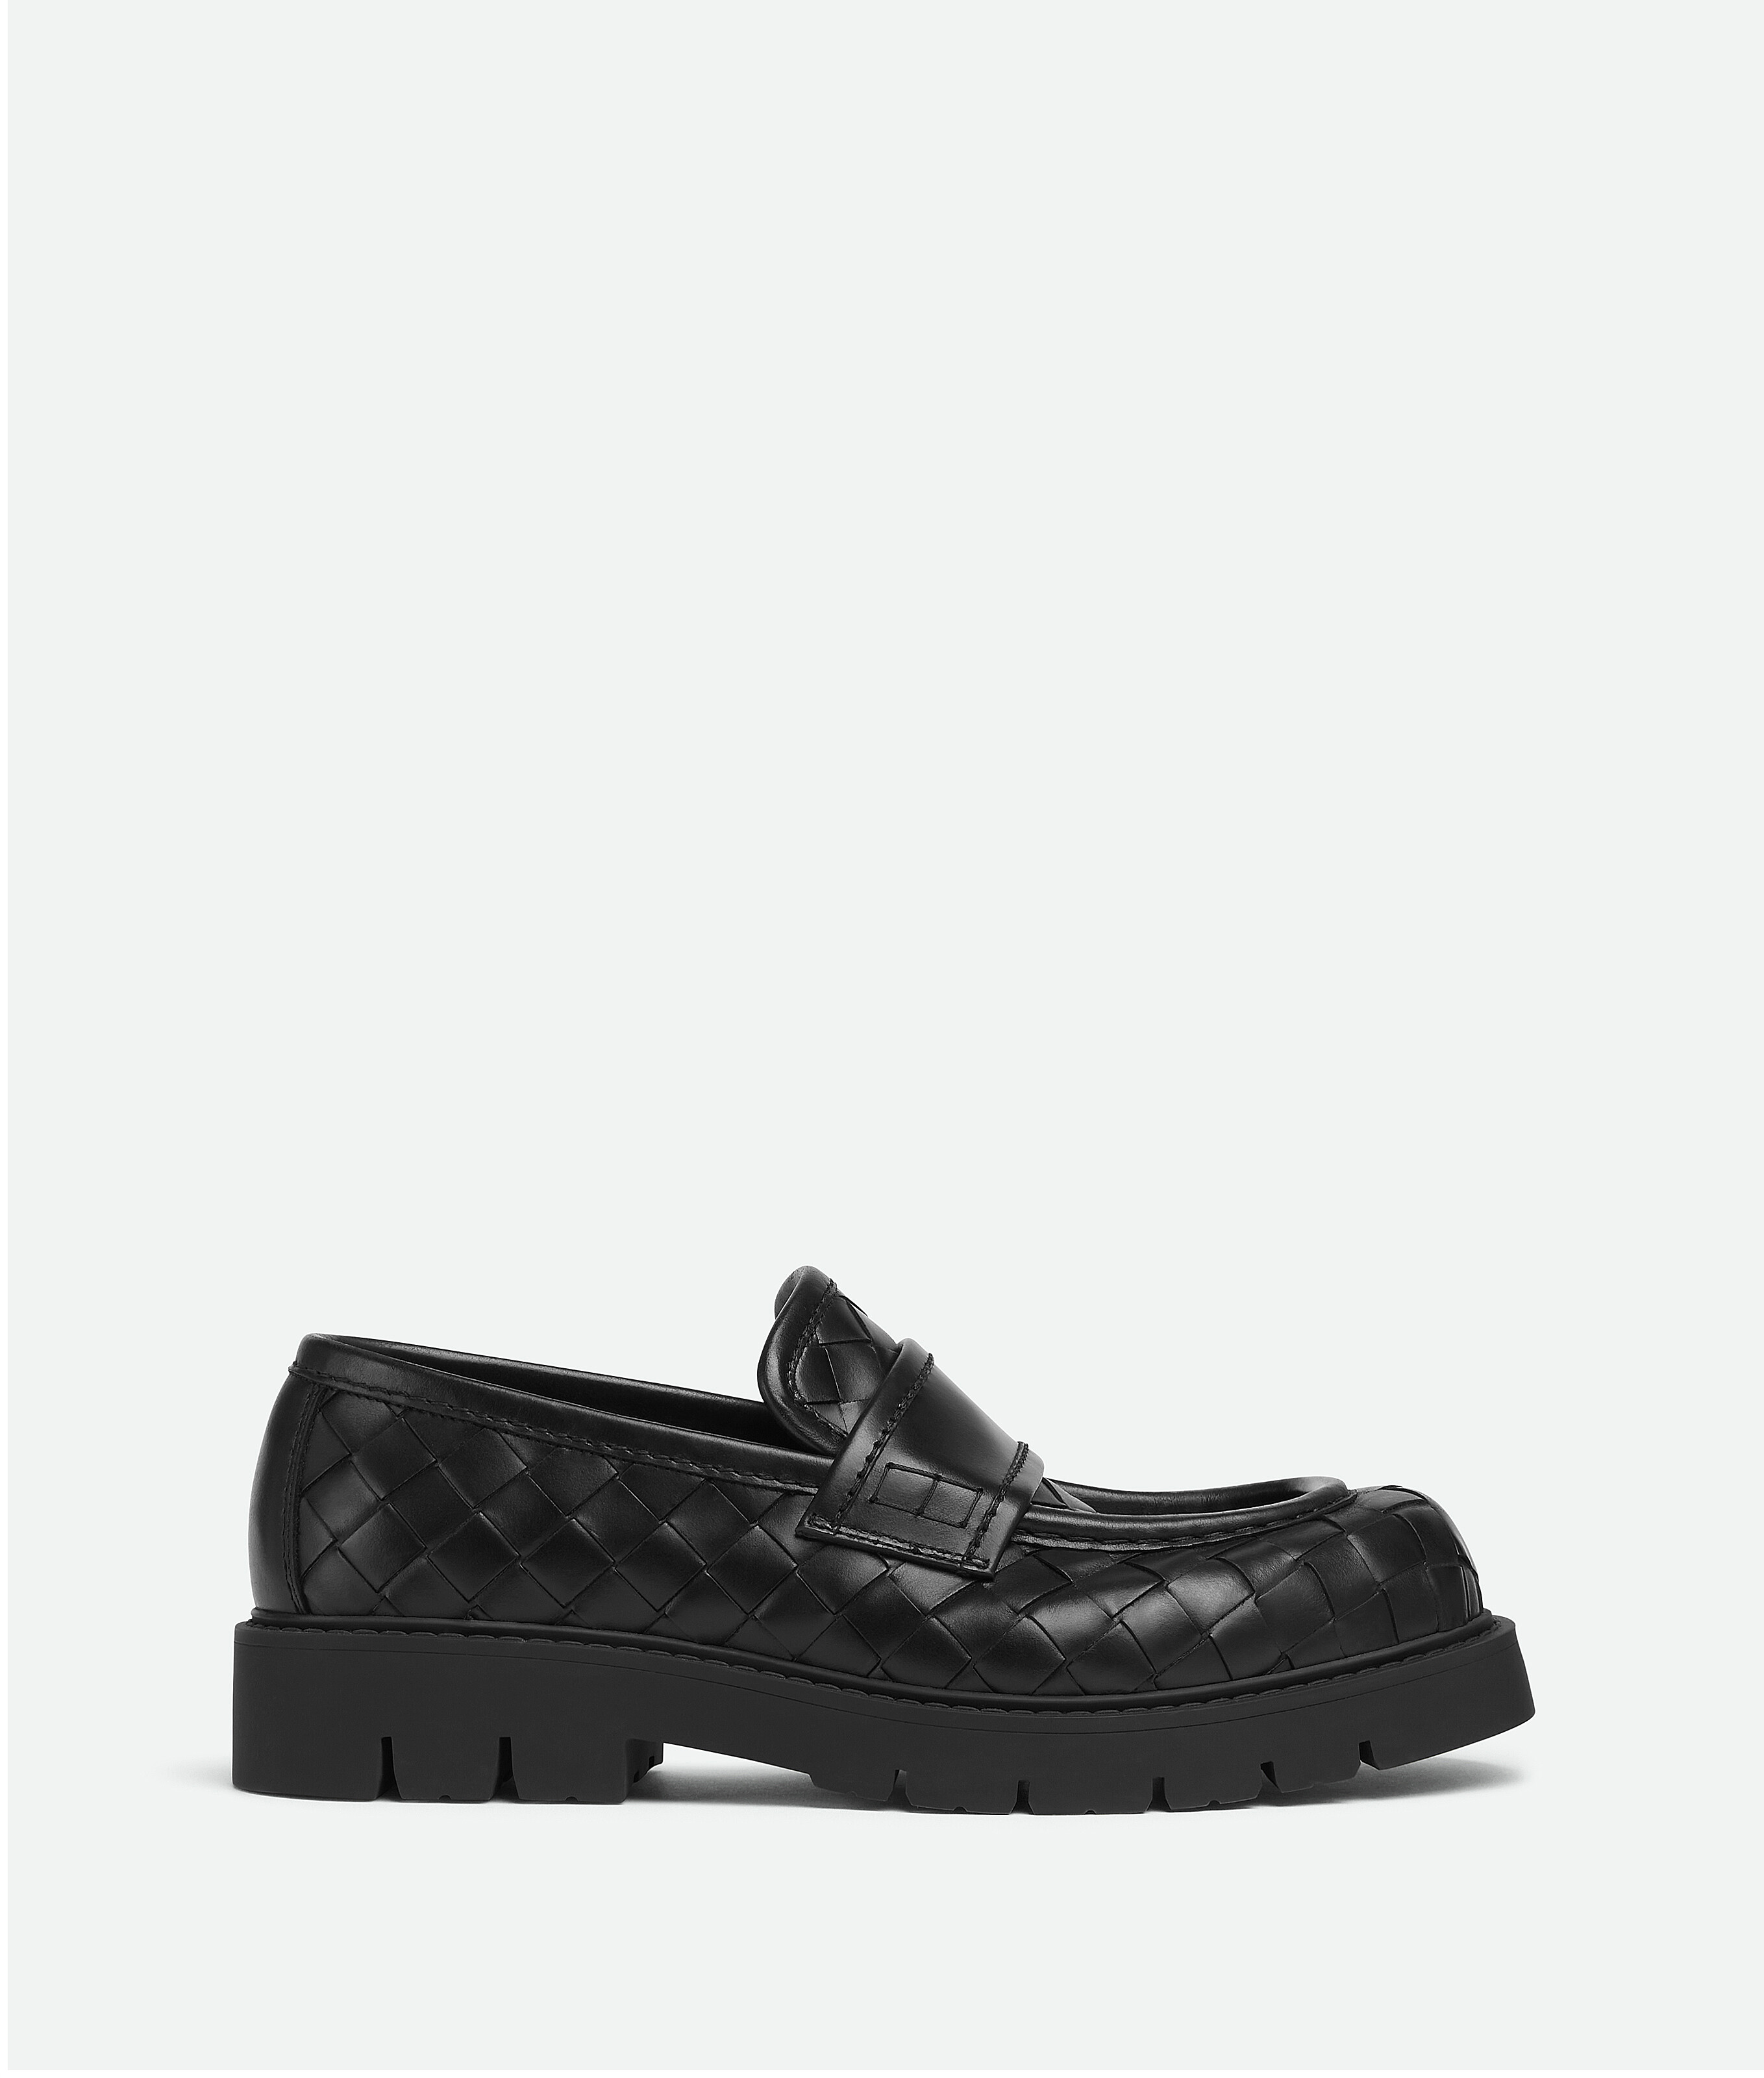 Bottega Veneta® Men's Haddock Loafer in Black. Shop online now.